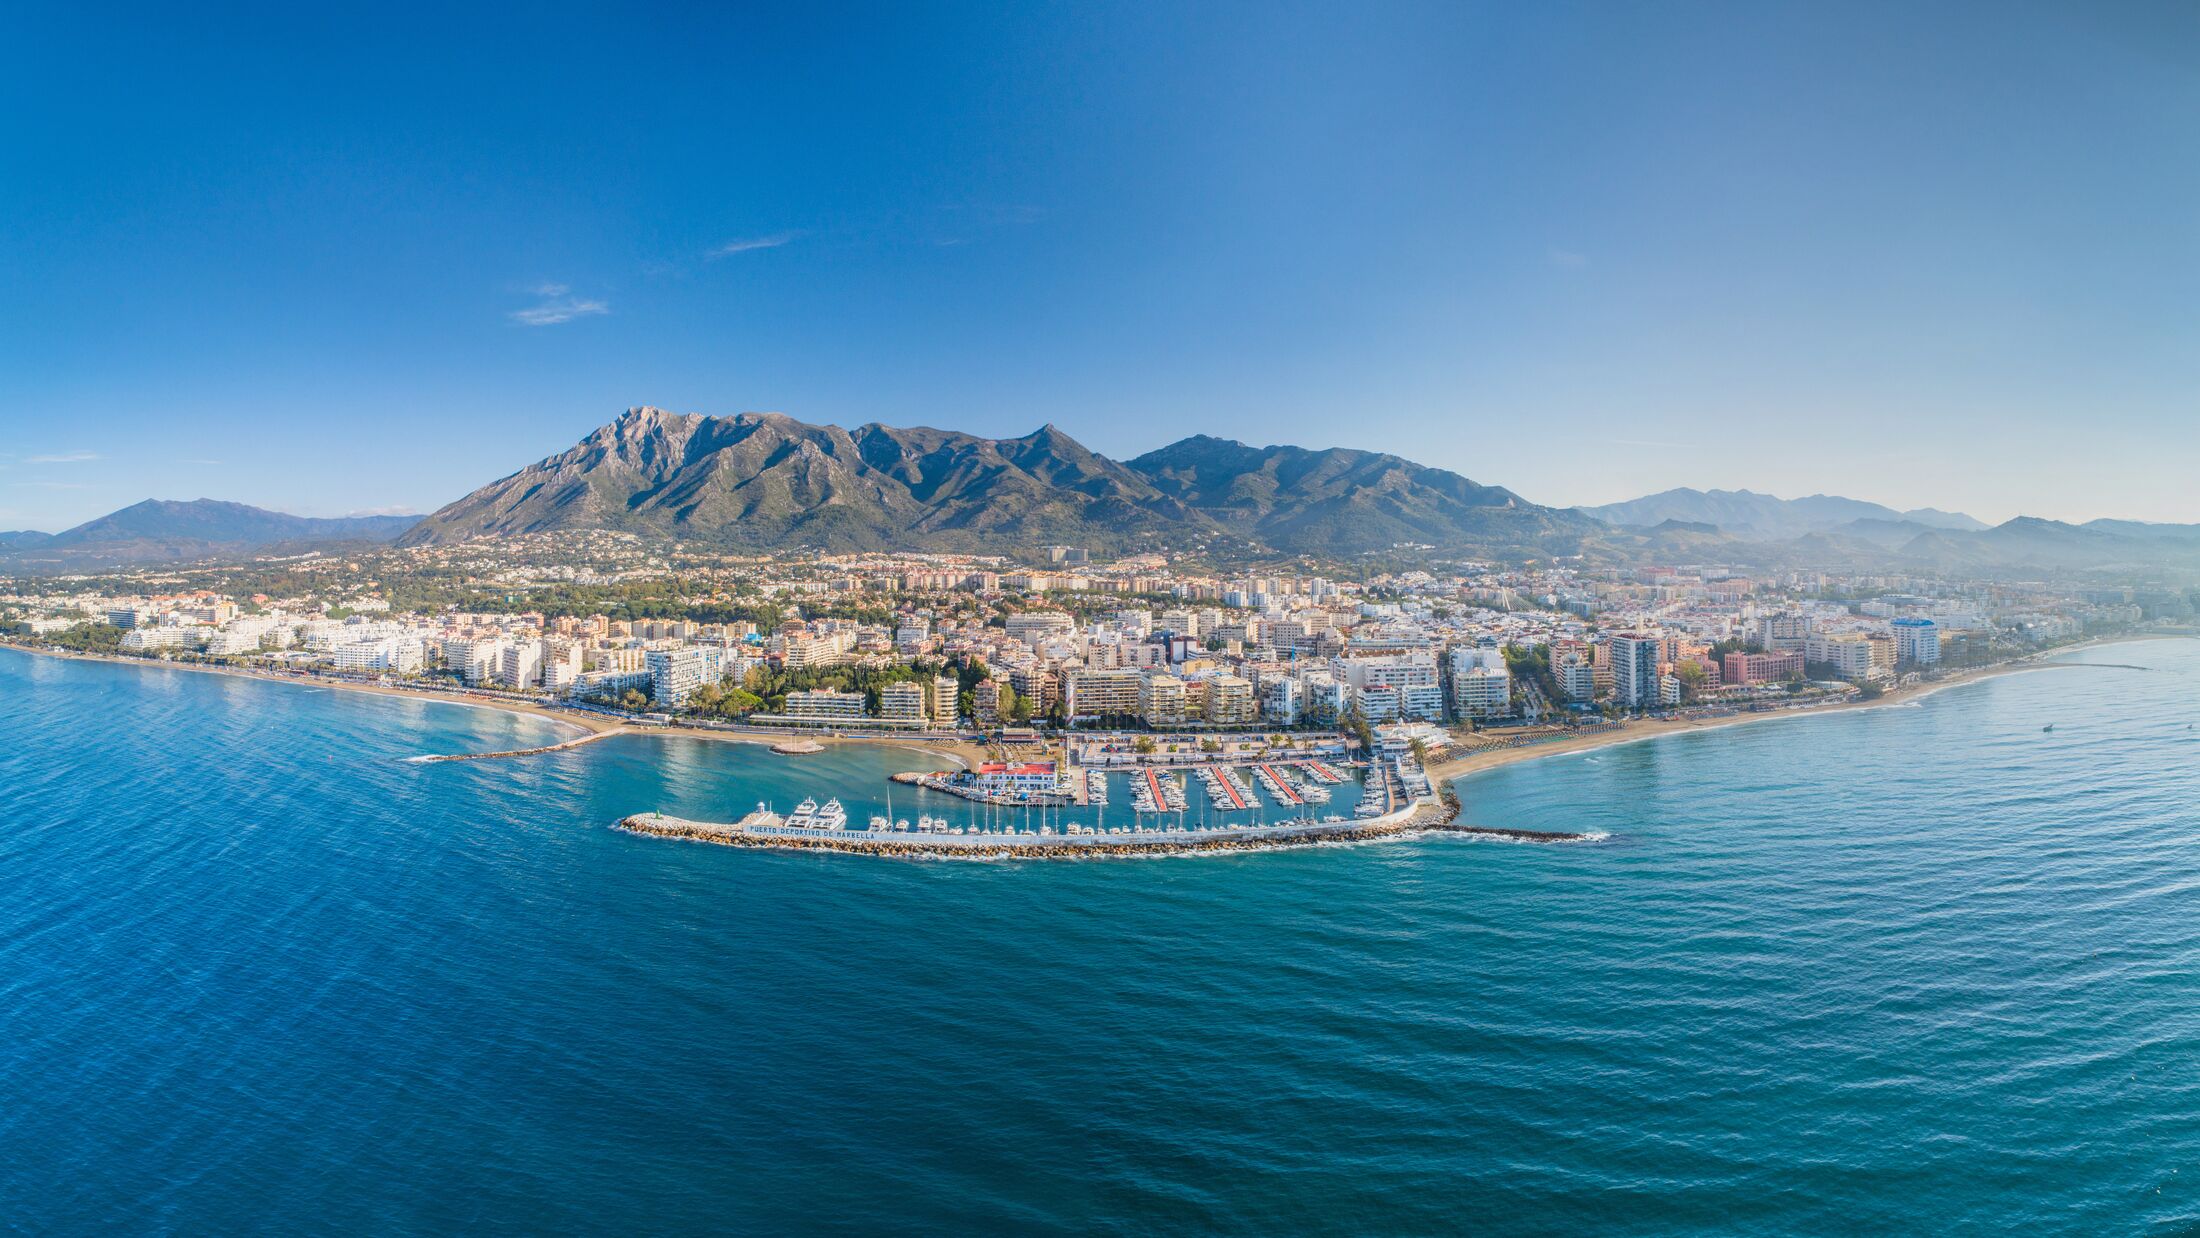 Marbella  aerial portrait panorama